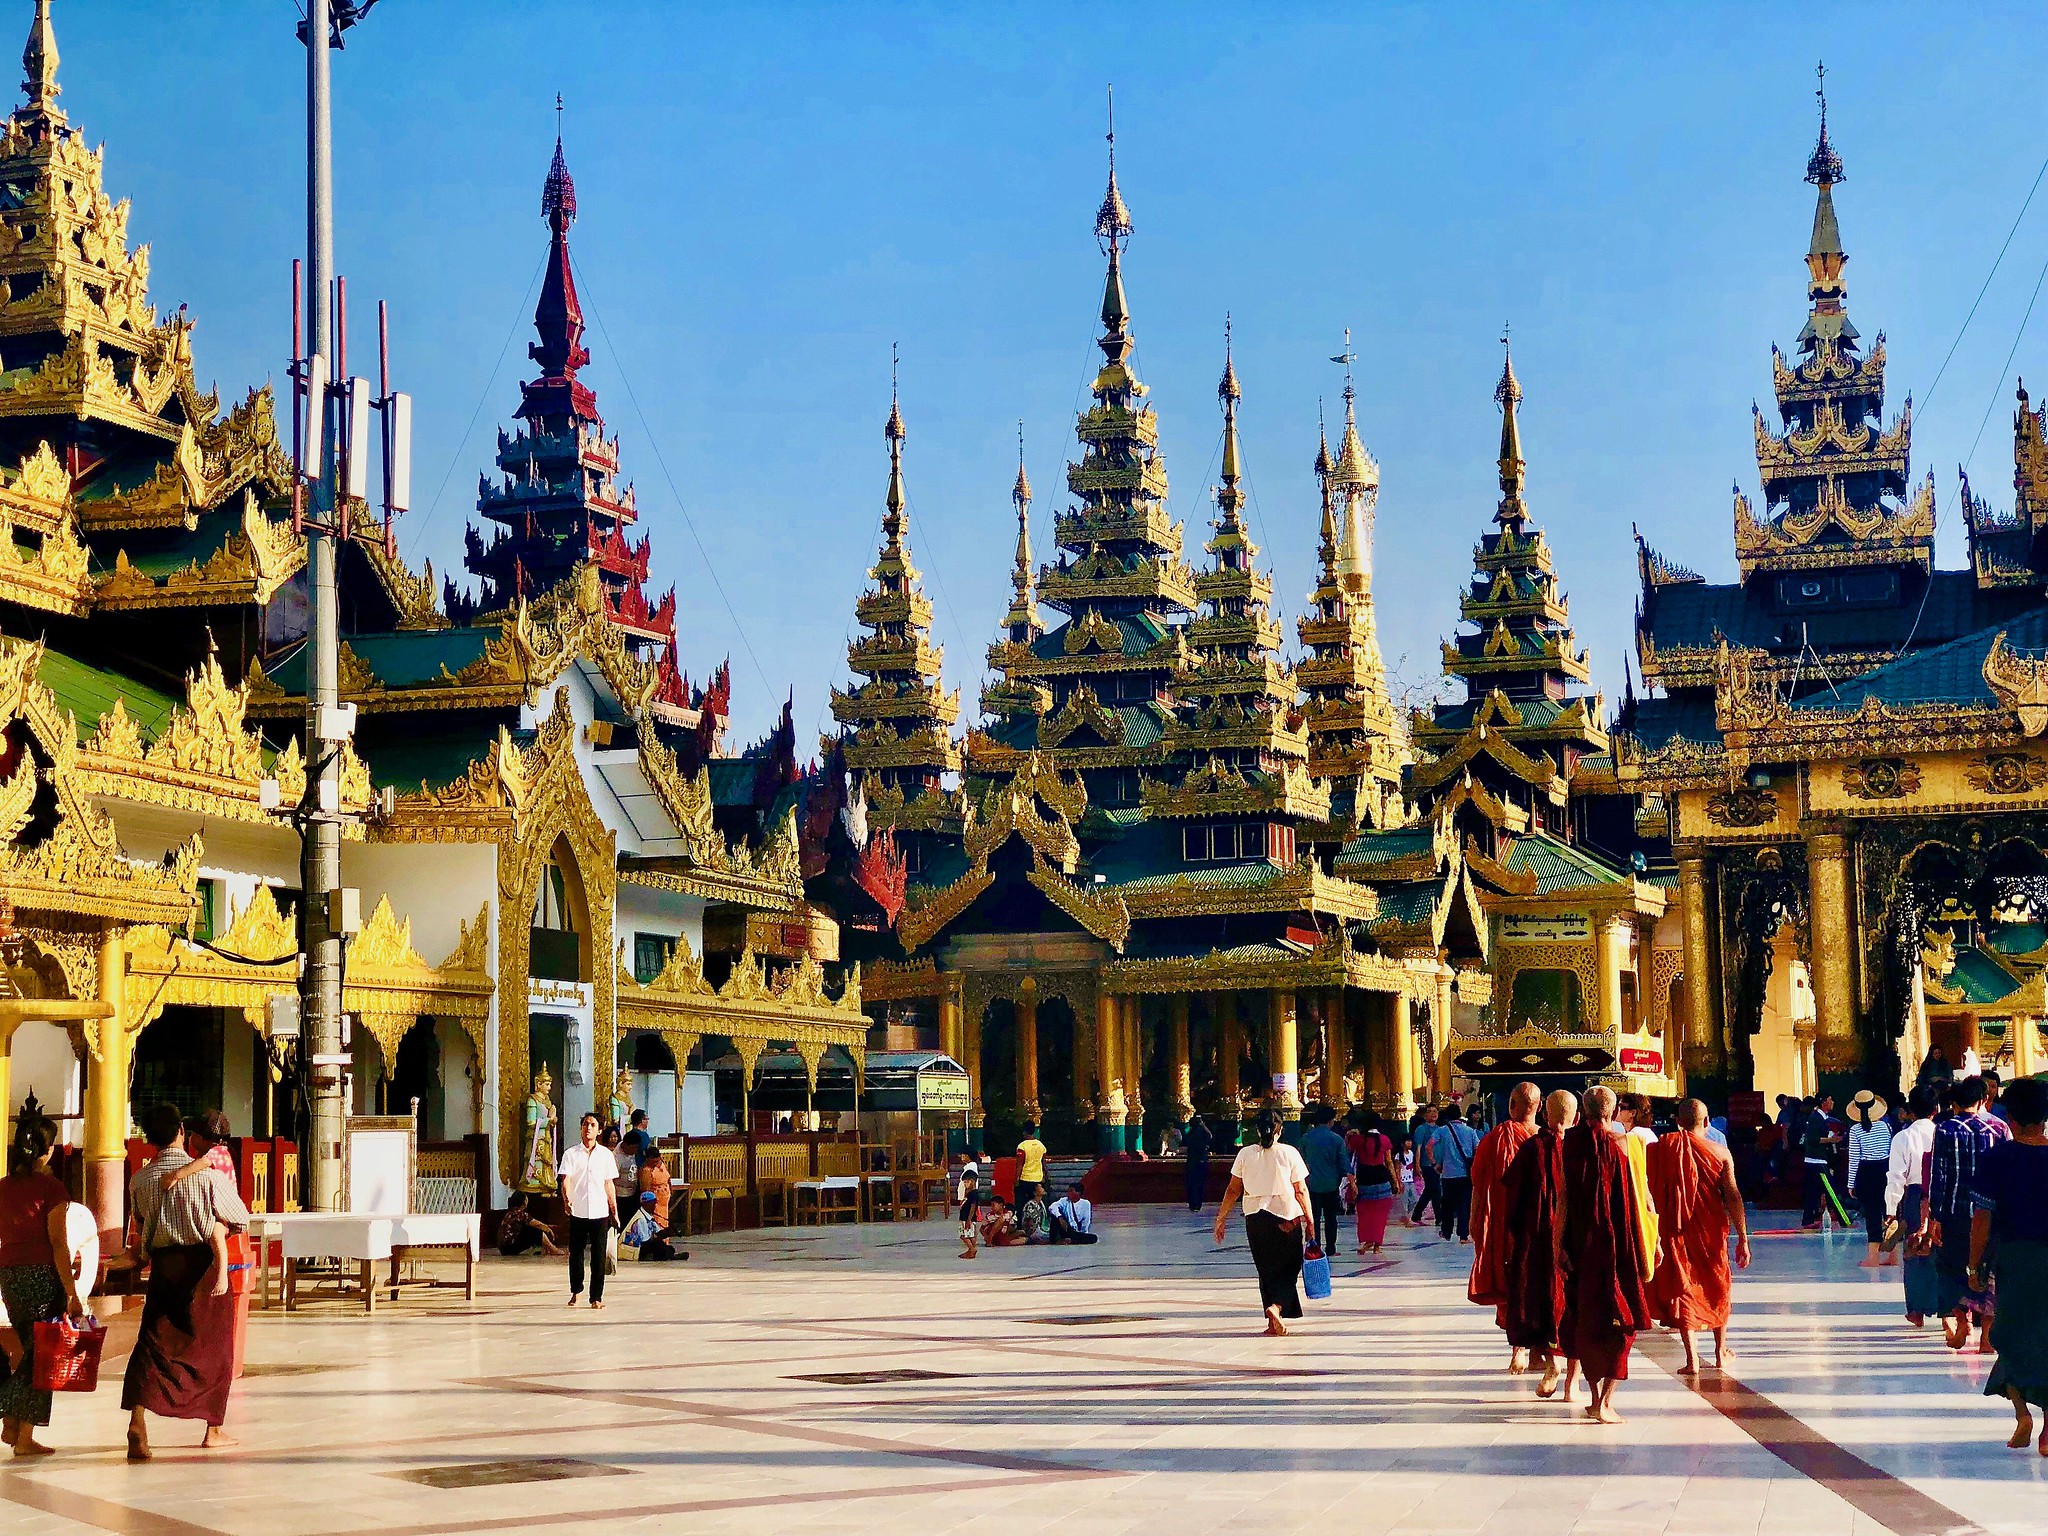 scene in Southeast Asia, pagodas